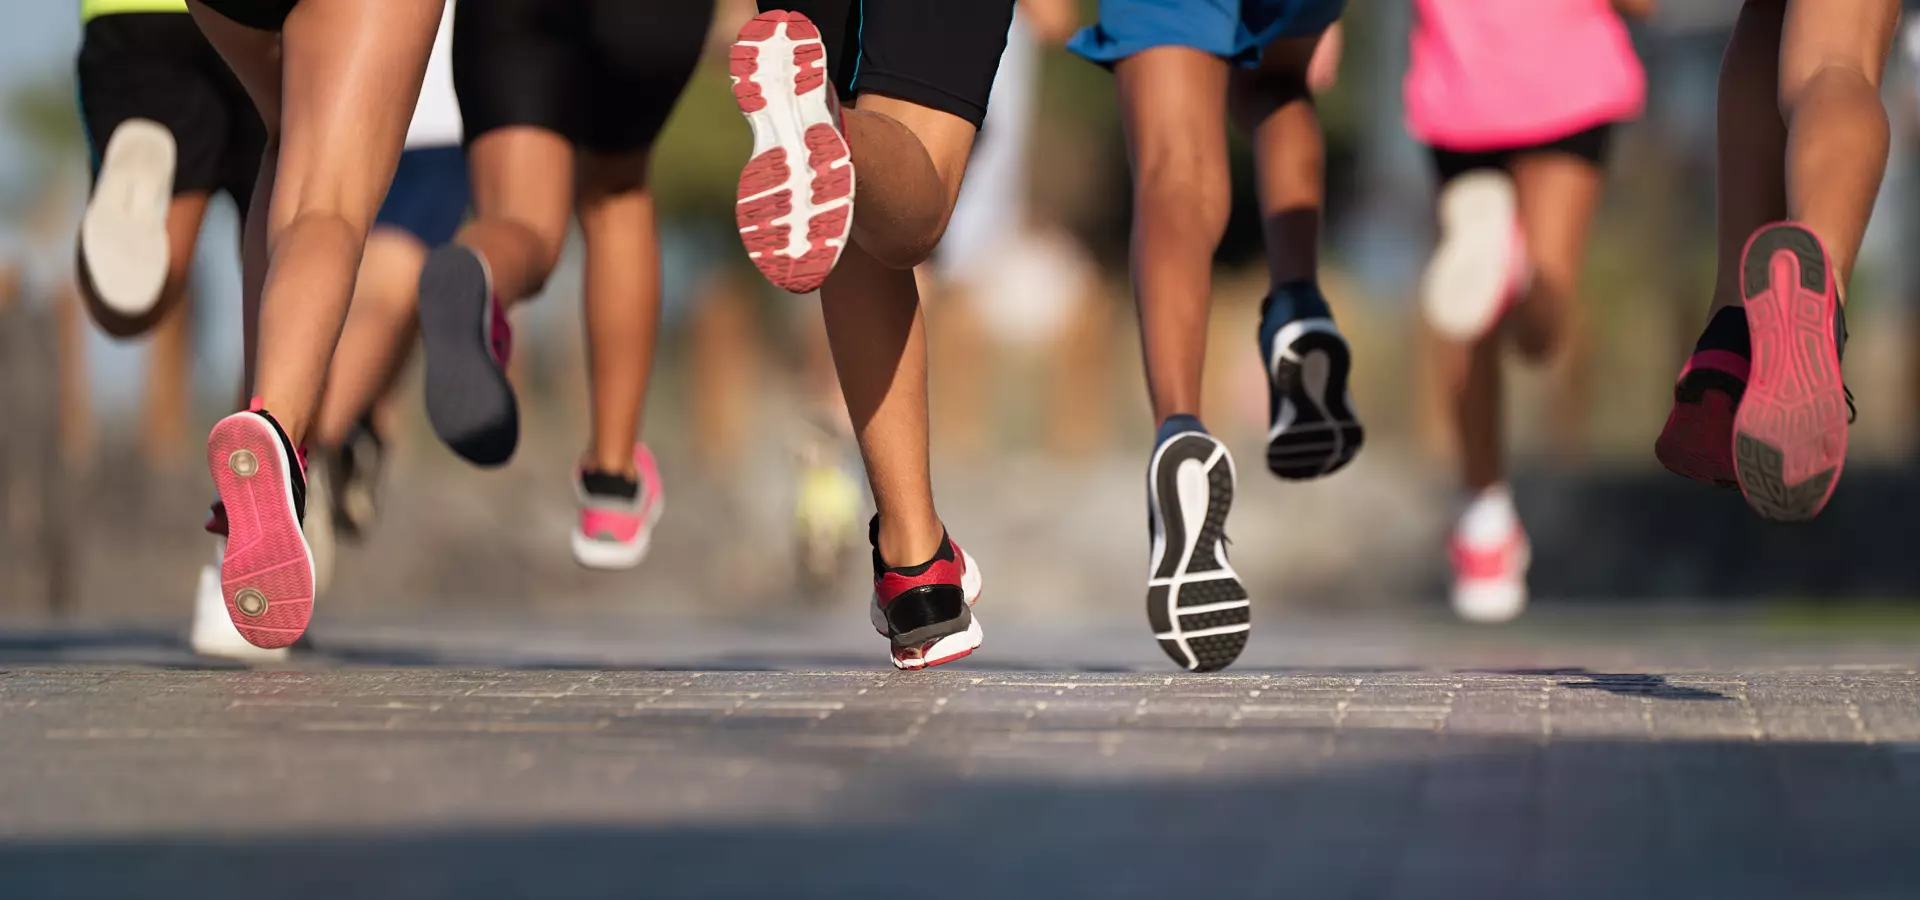 Legs of people running, wearing running attire.